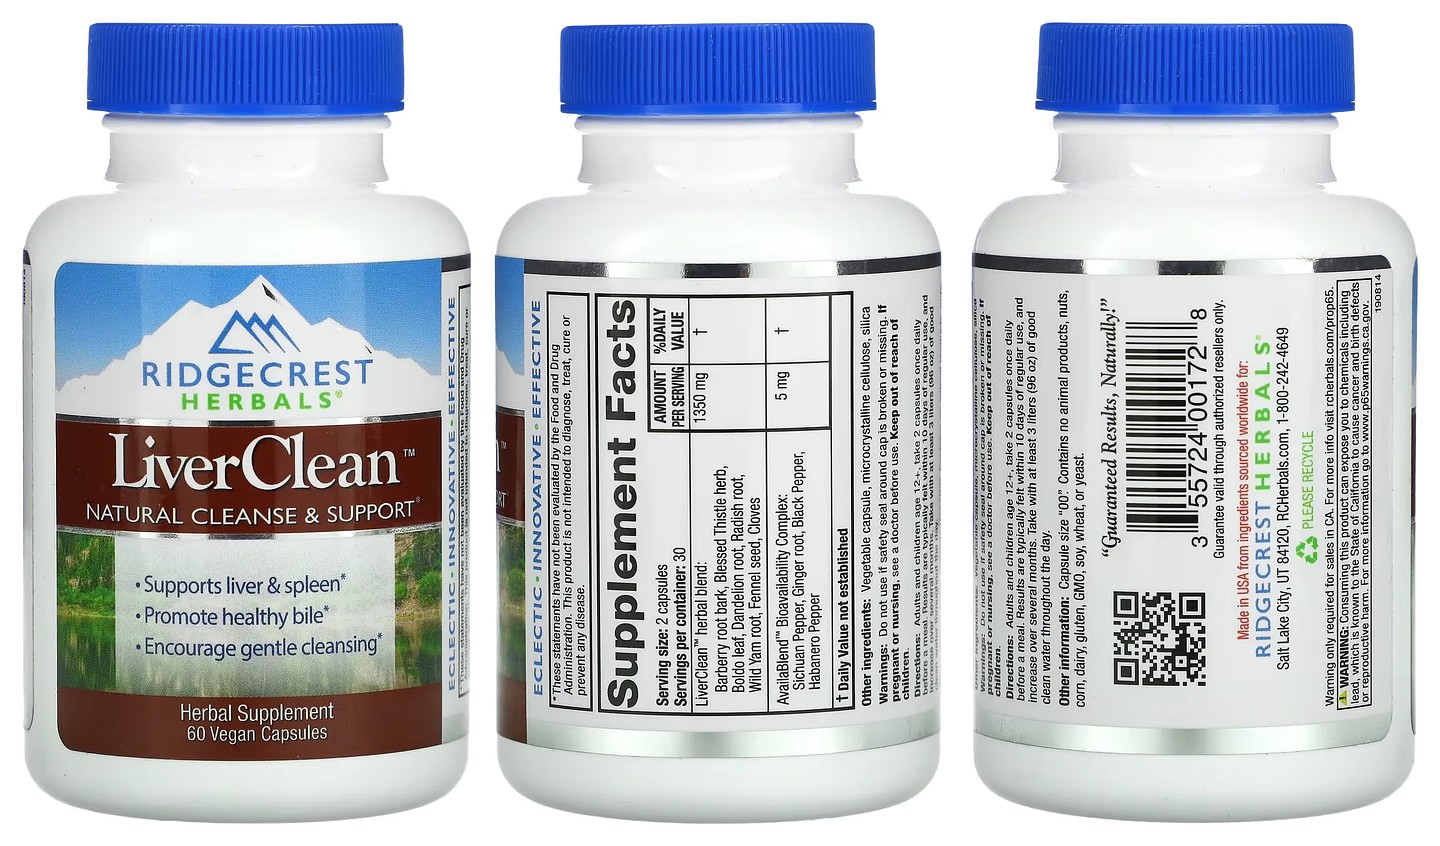 RidgeCrest Herbals, LiverClean packaging